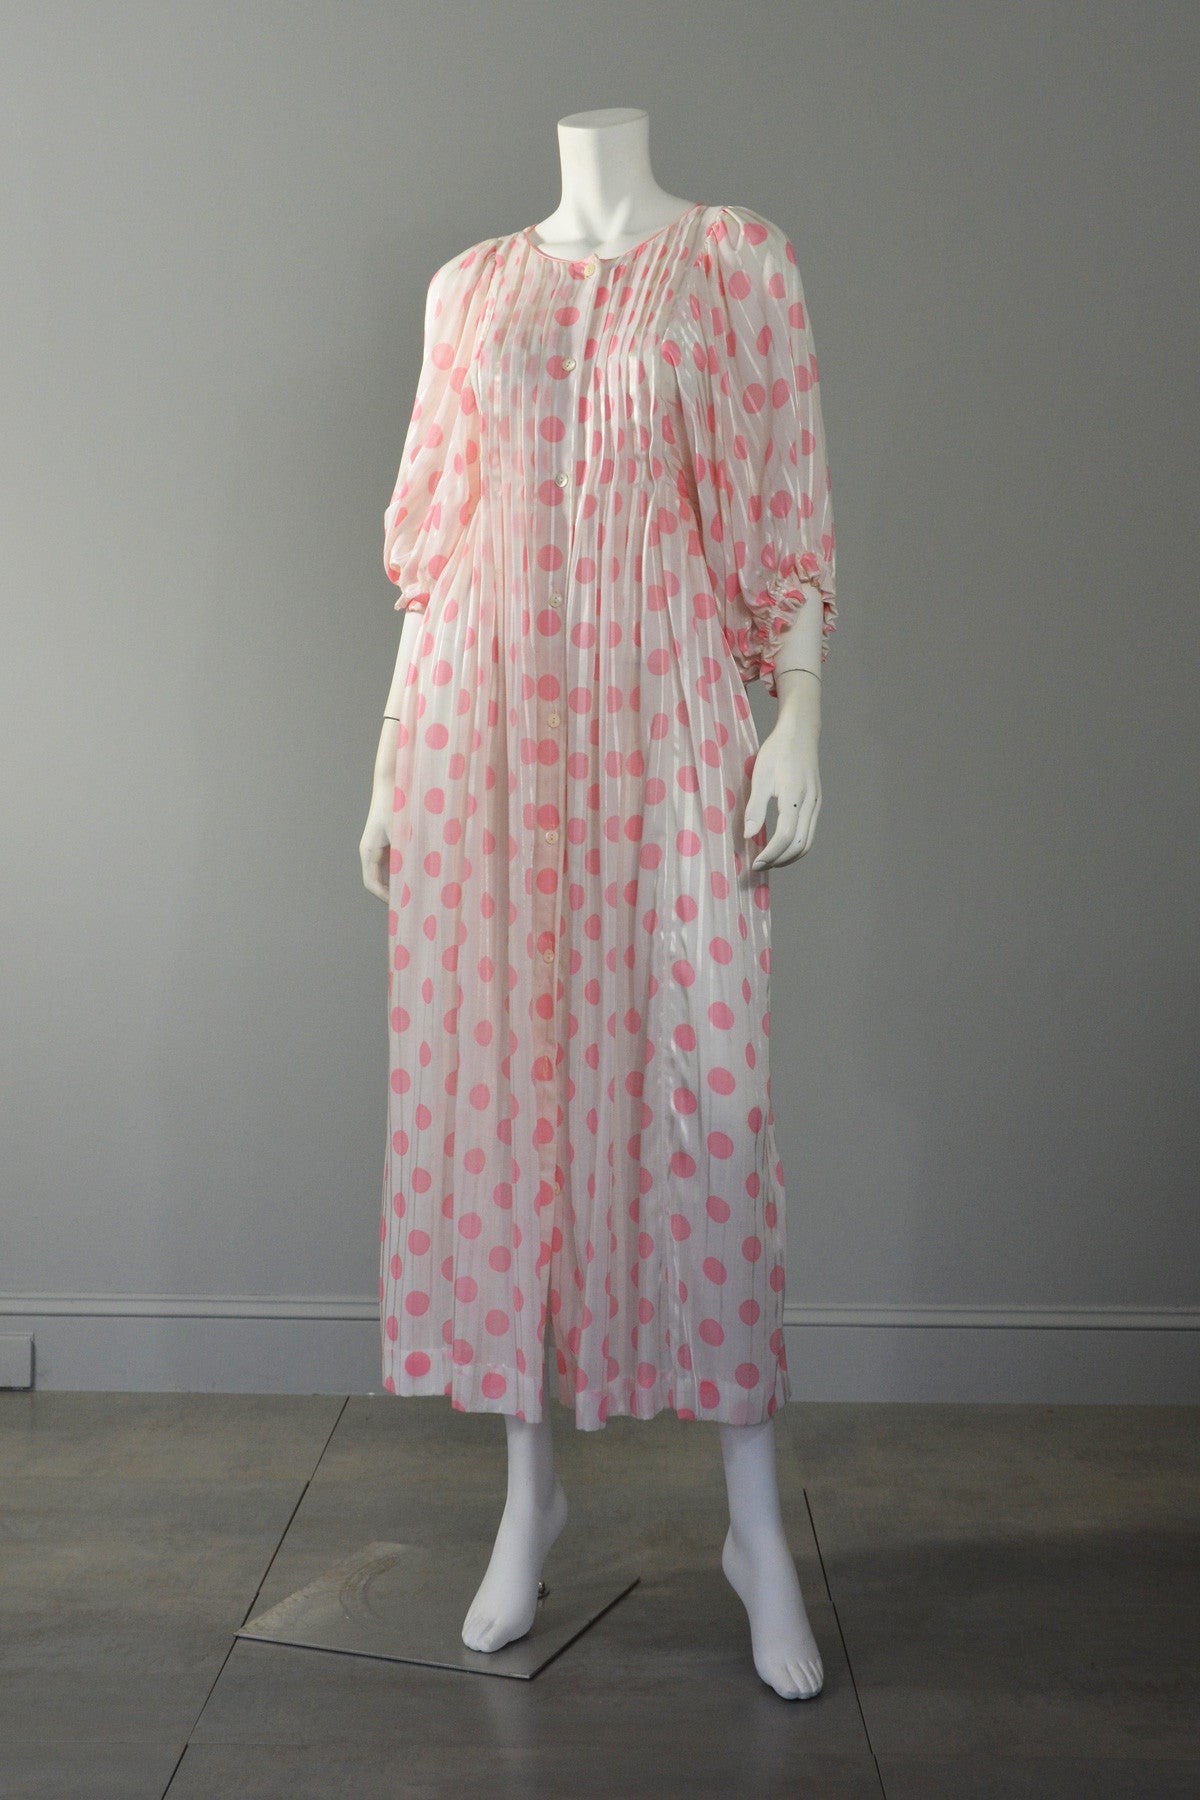 Christian Dior Pink Polka Dot Babydoll Dressing Gown